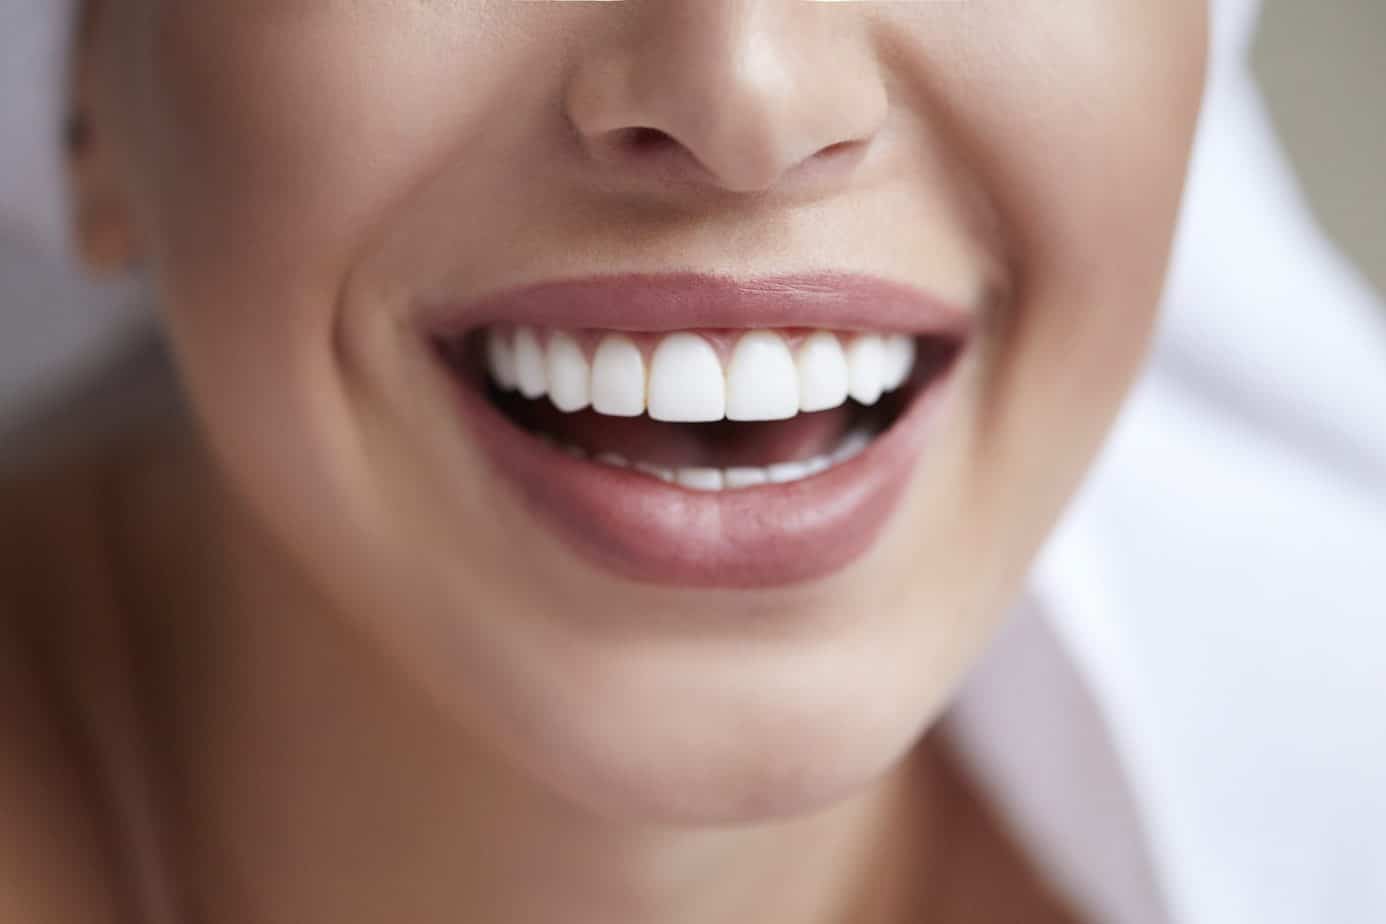 How to whiten teeth? The best ways